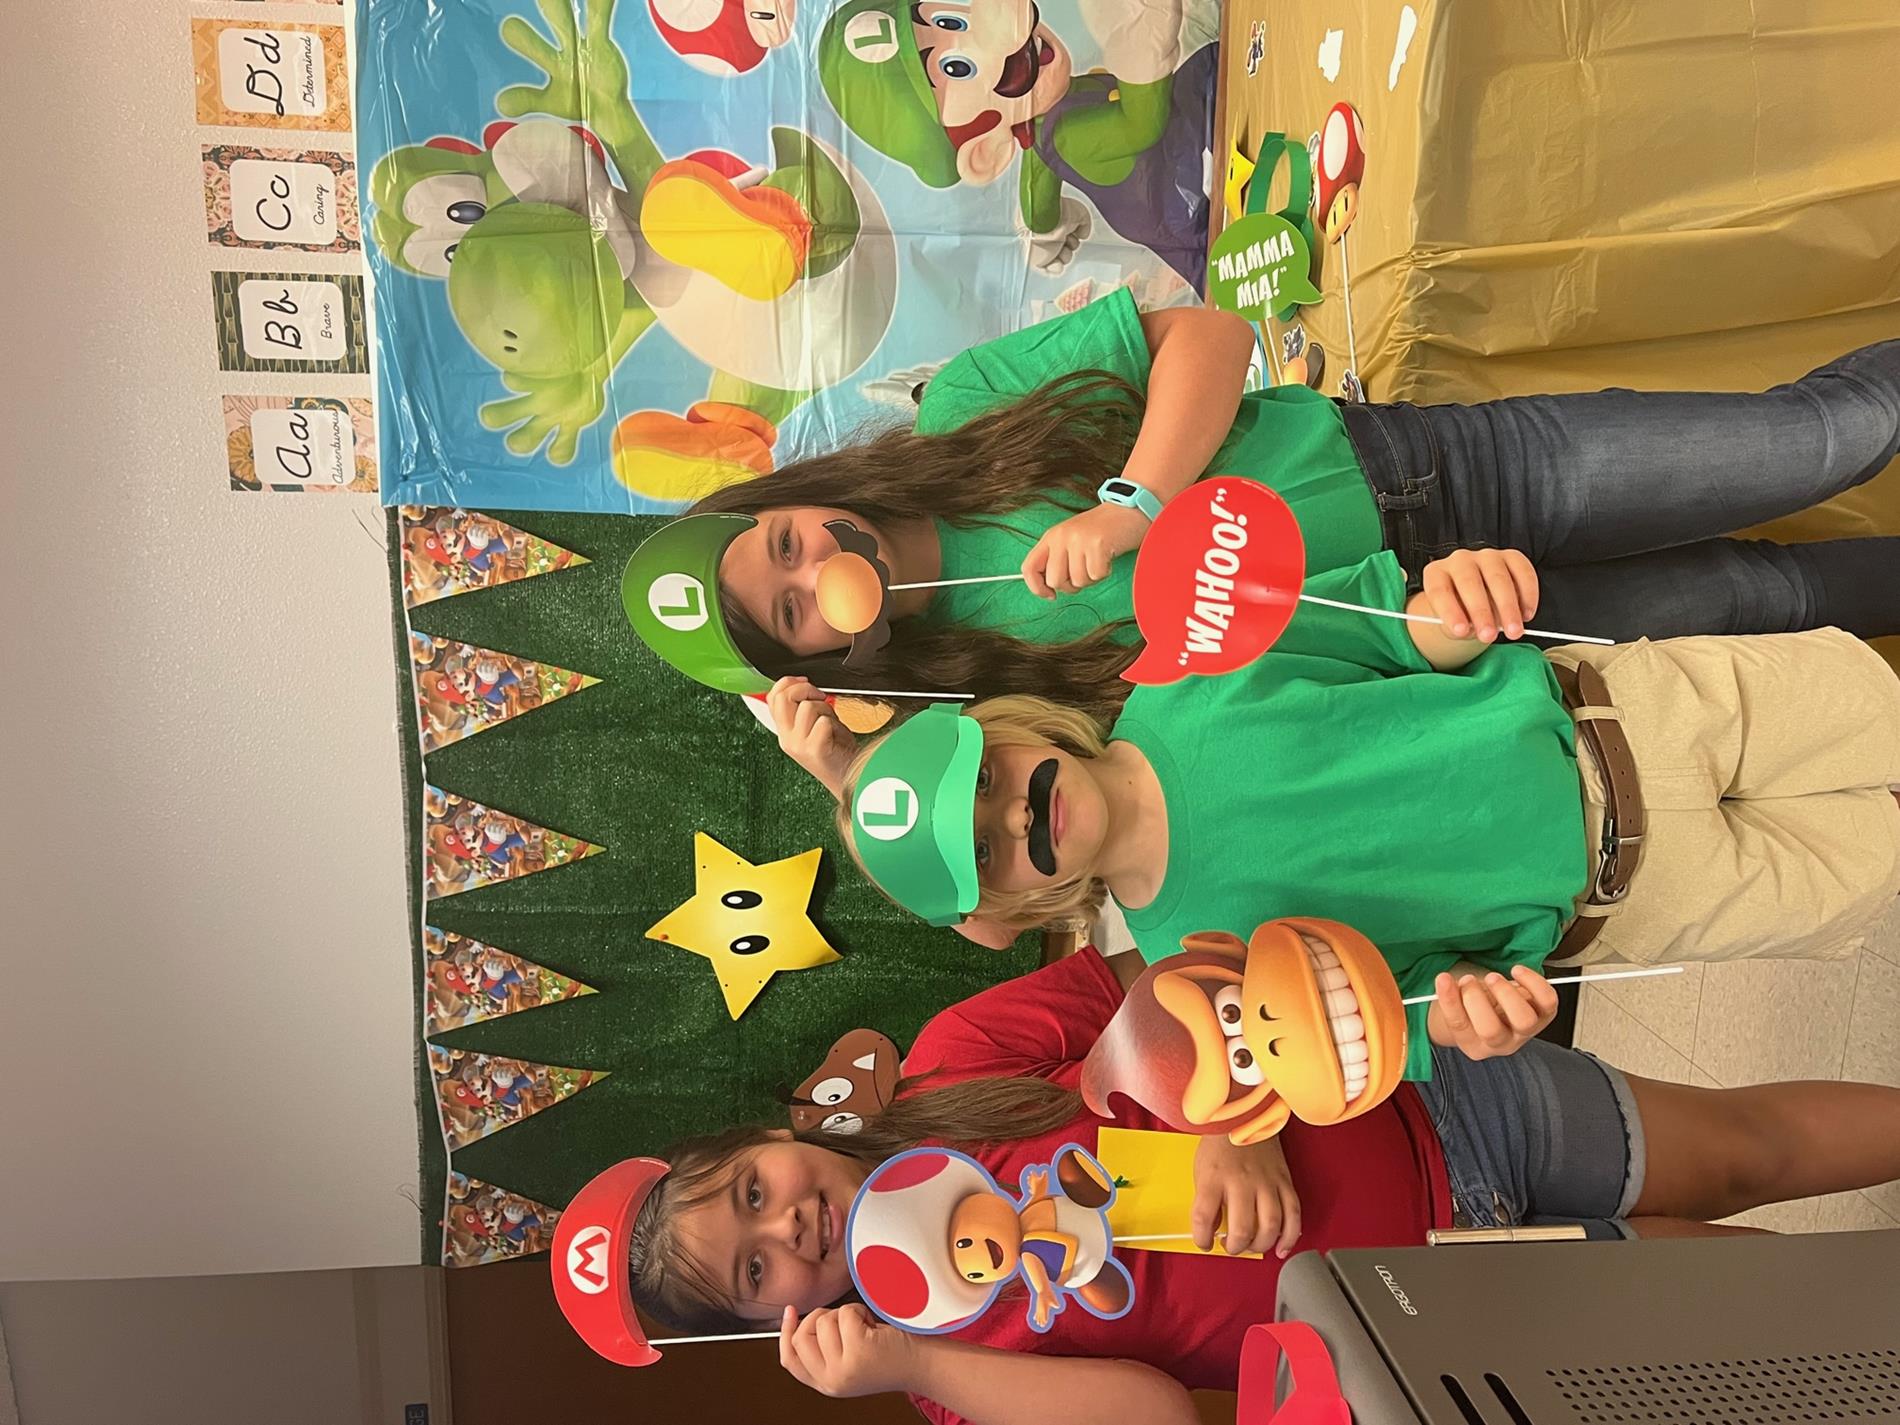 Mario Day fun for 3rd grade students.